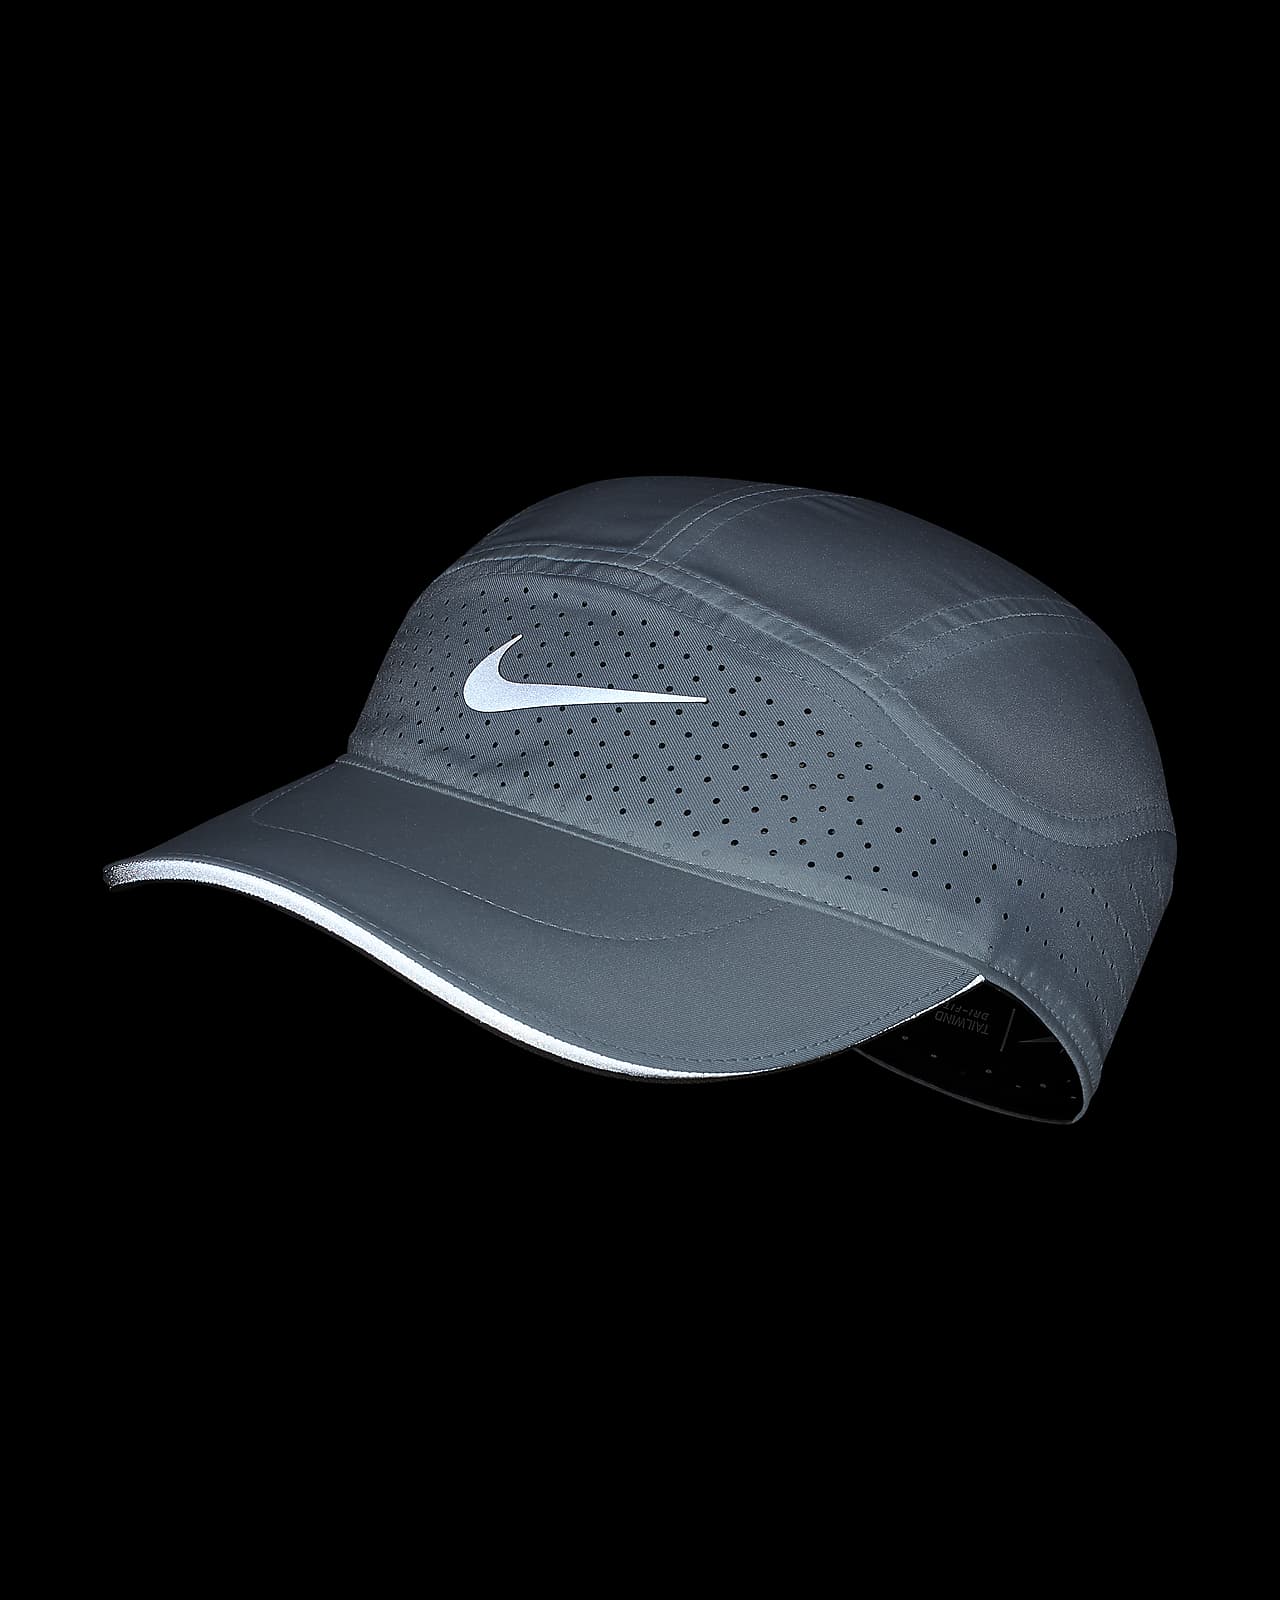 Nike AeroBill Tailwind Running Cap.